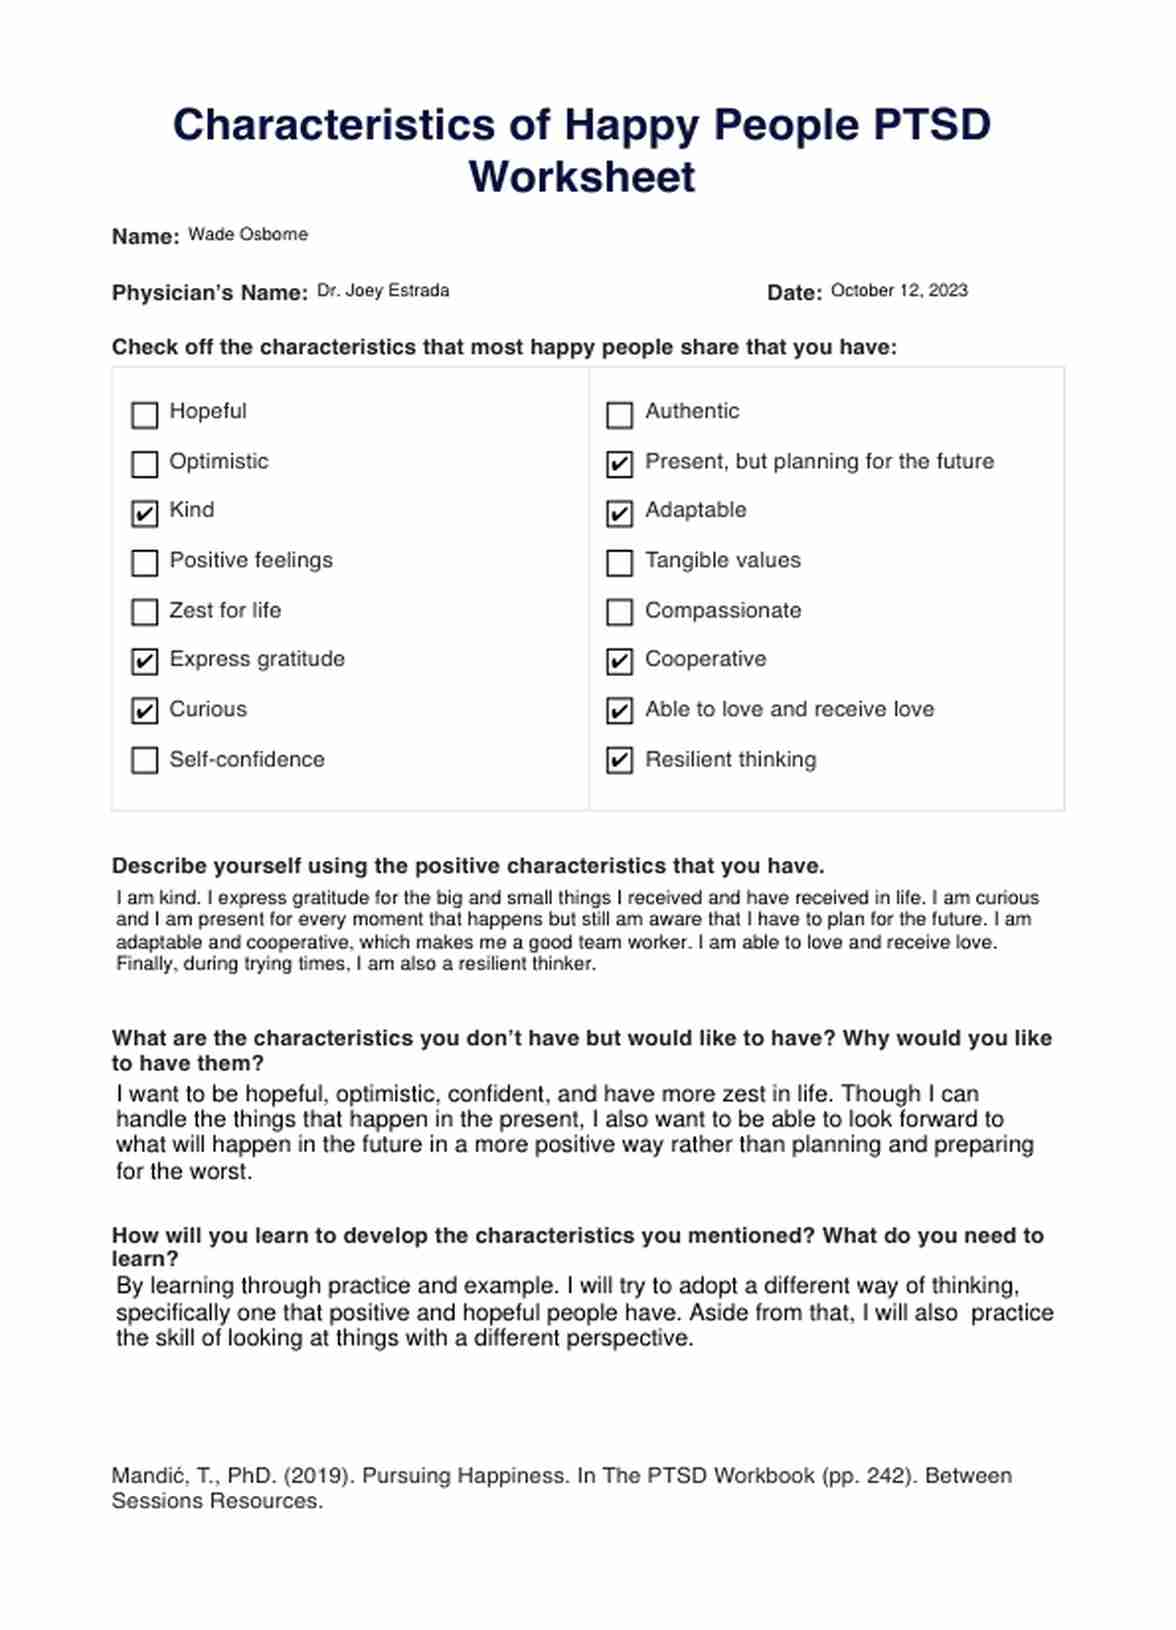 Characteristics of Happy People PTSD Worksheet PDF Example